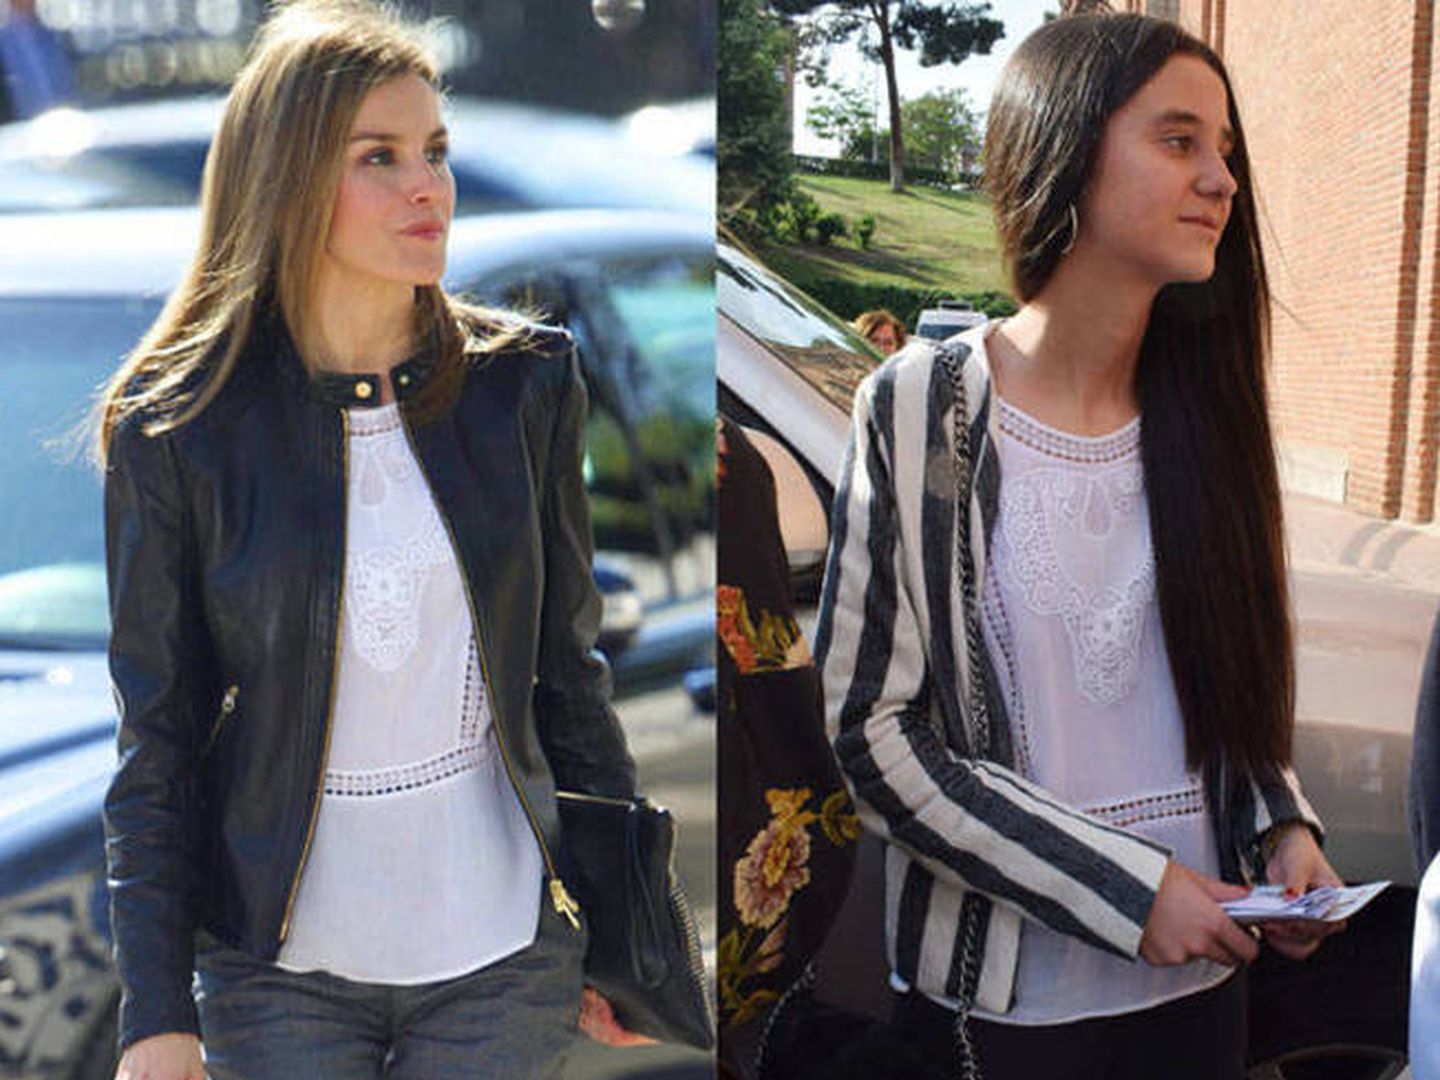 Letizia y Victoria Federica con la misma camisa. (Cordon Press)